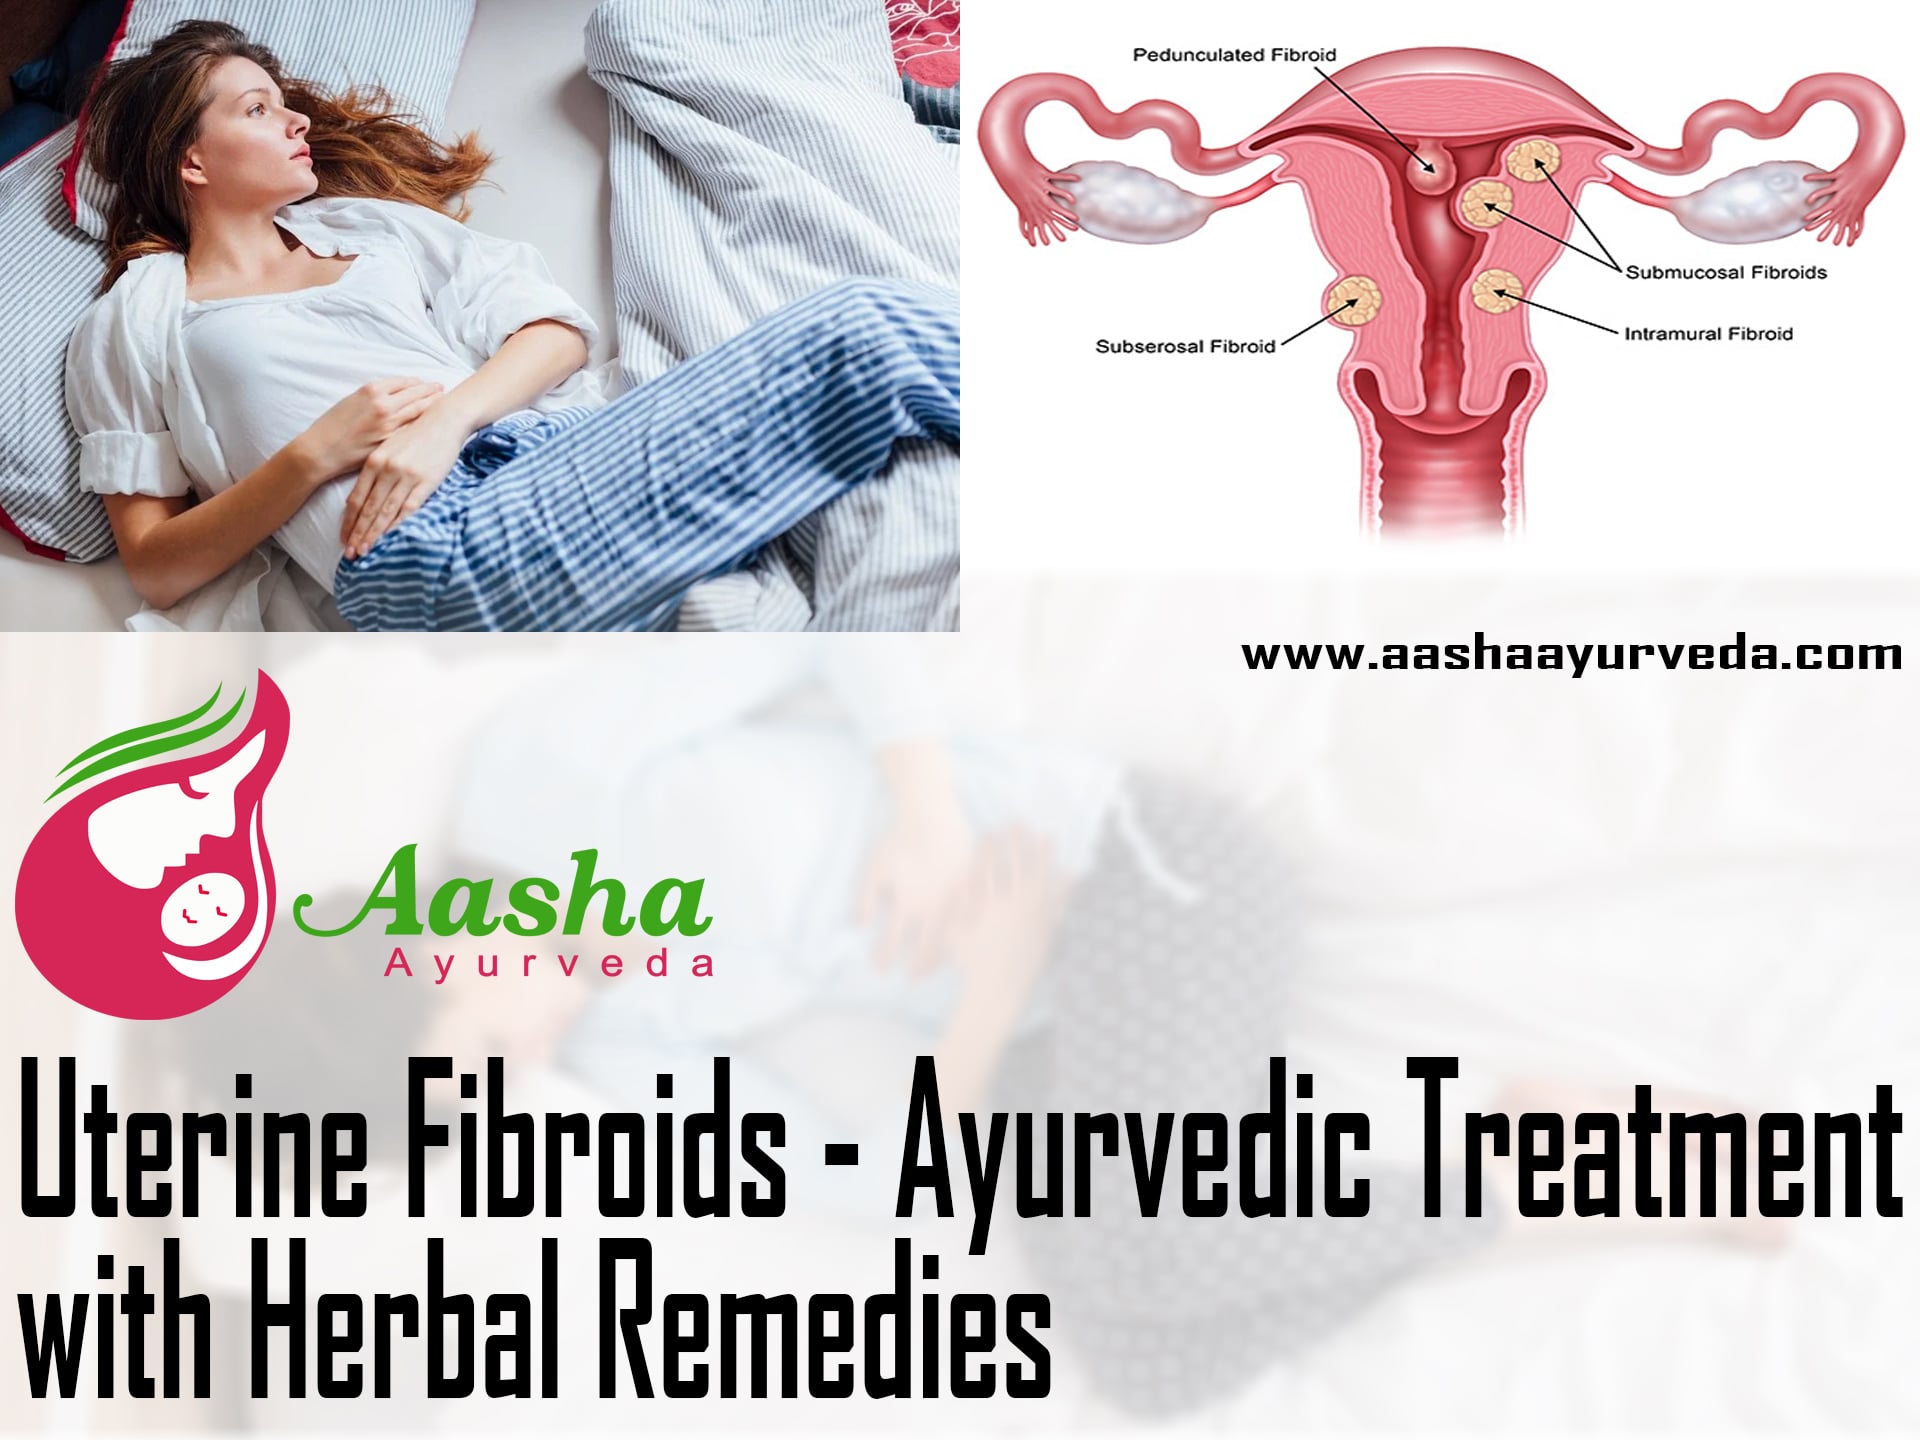 Uterine Fibroids - Ayurvedic Treatment with Herbal Remedies 